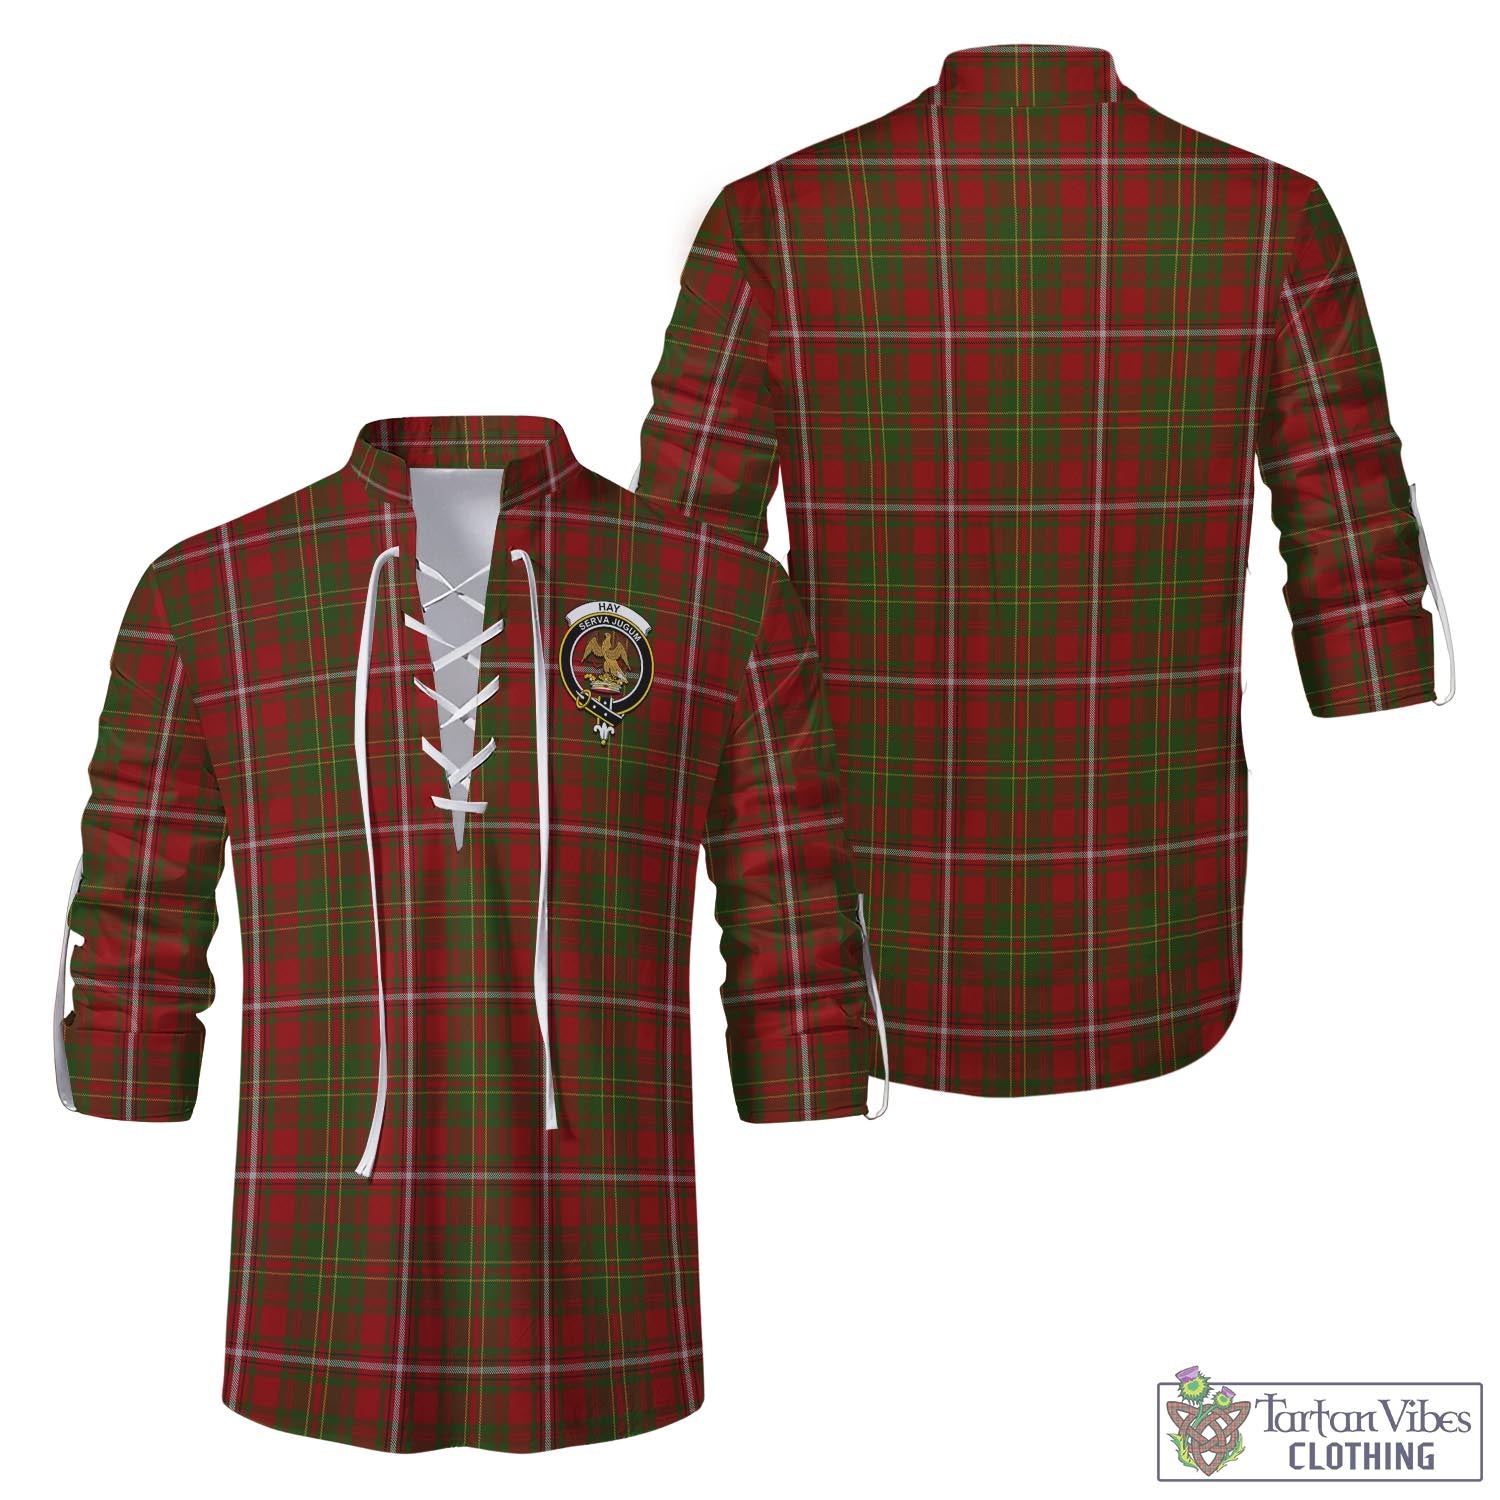 Tartan Vibes Clothing Hay Tartan Men's Scottish Traditional Jacobite Ghillie Kilt Shirt with Family Crest